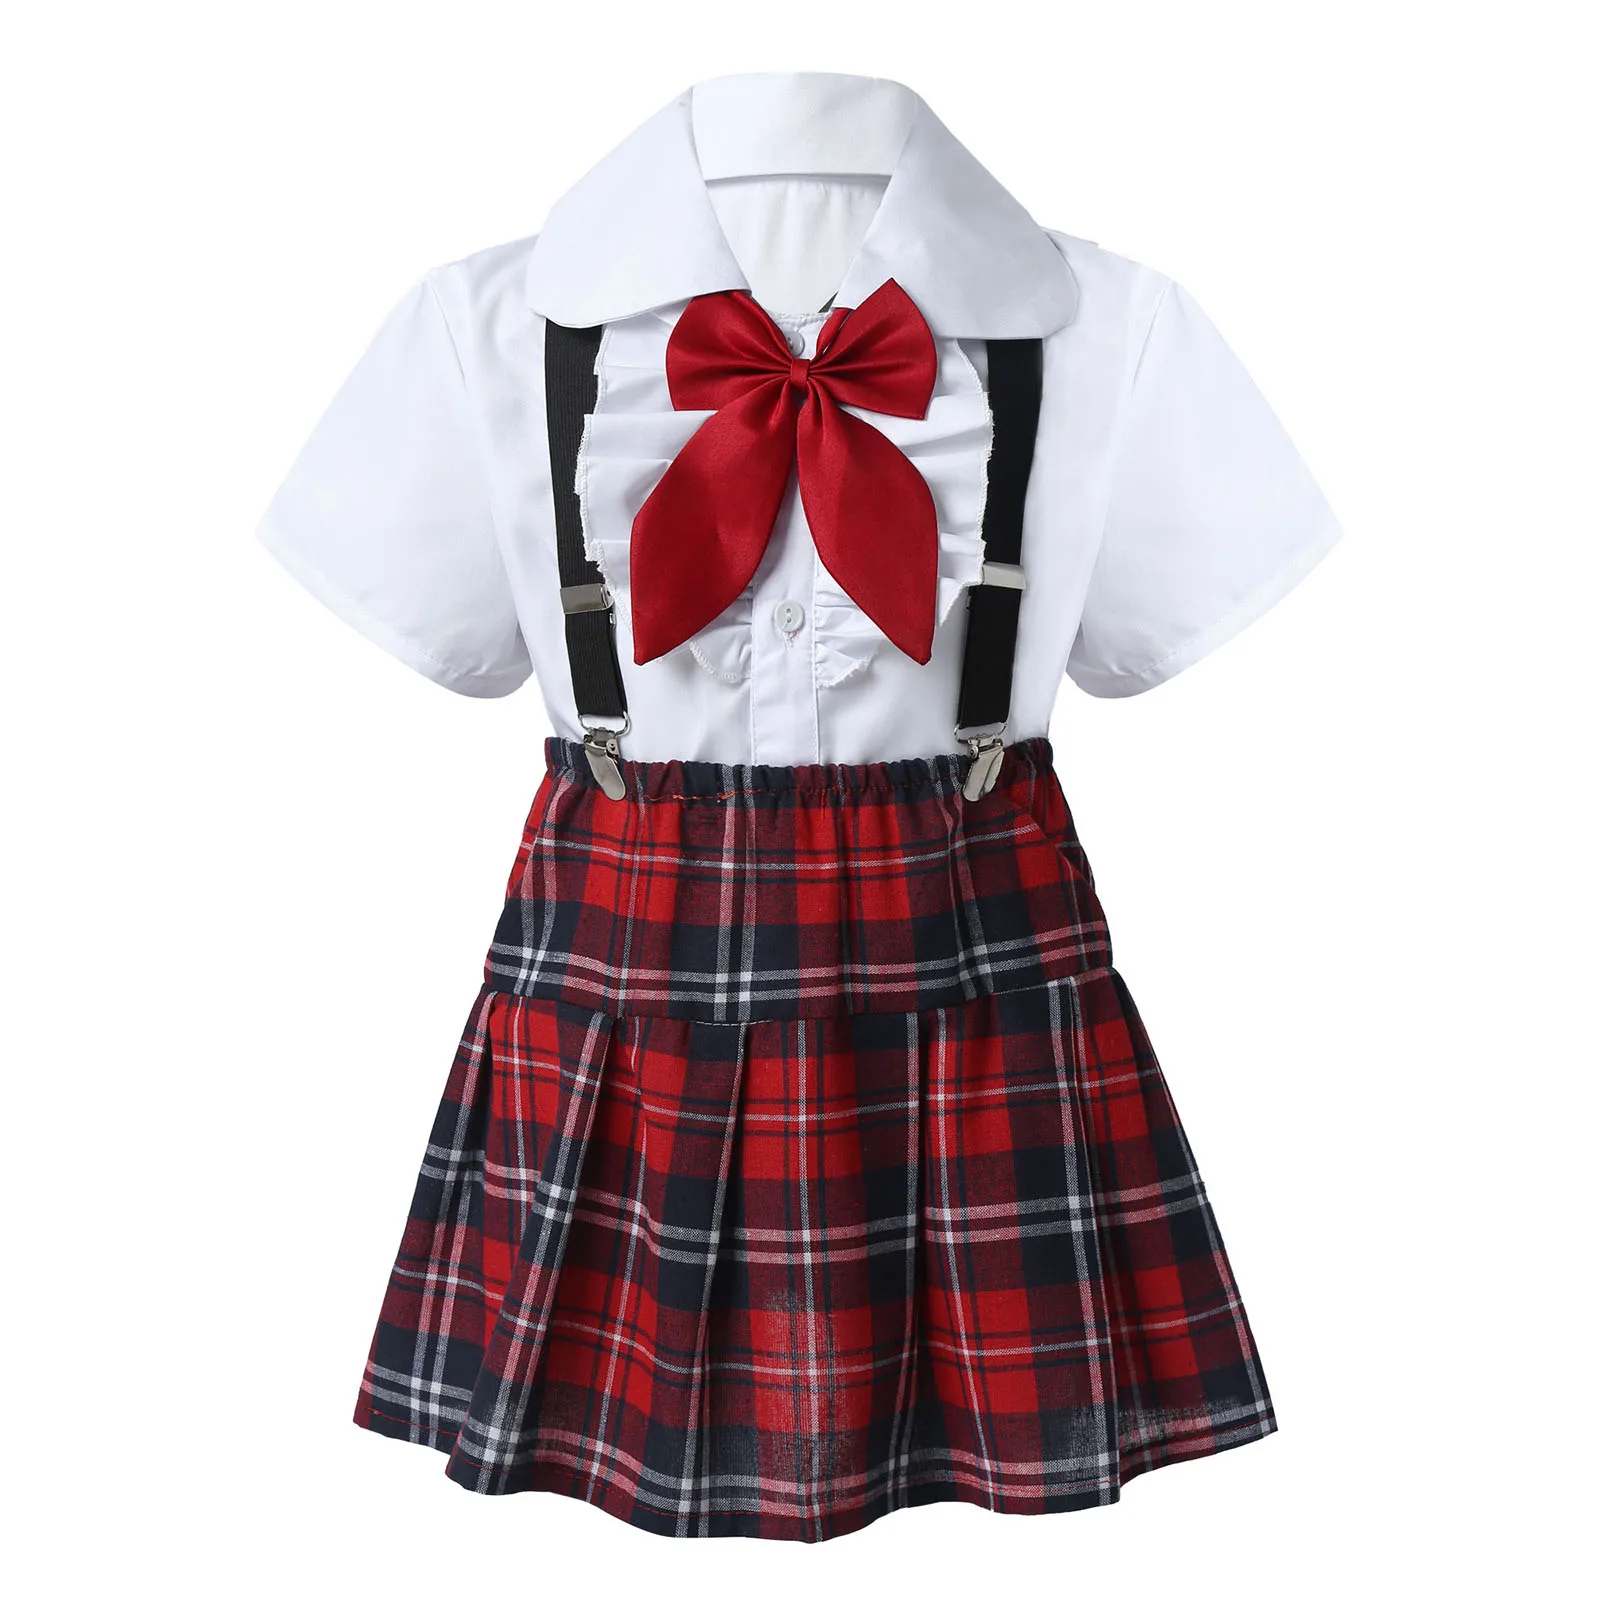 Комплект класически студентска дрехи за момичета, Училищни униформи в британския стил, клетчатая Плиссированная пола трапецовидна форма с подтяжками и равенство-лък Изображение 0 